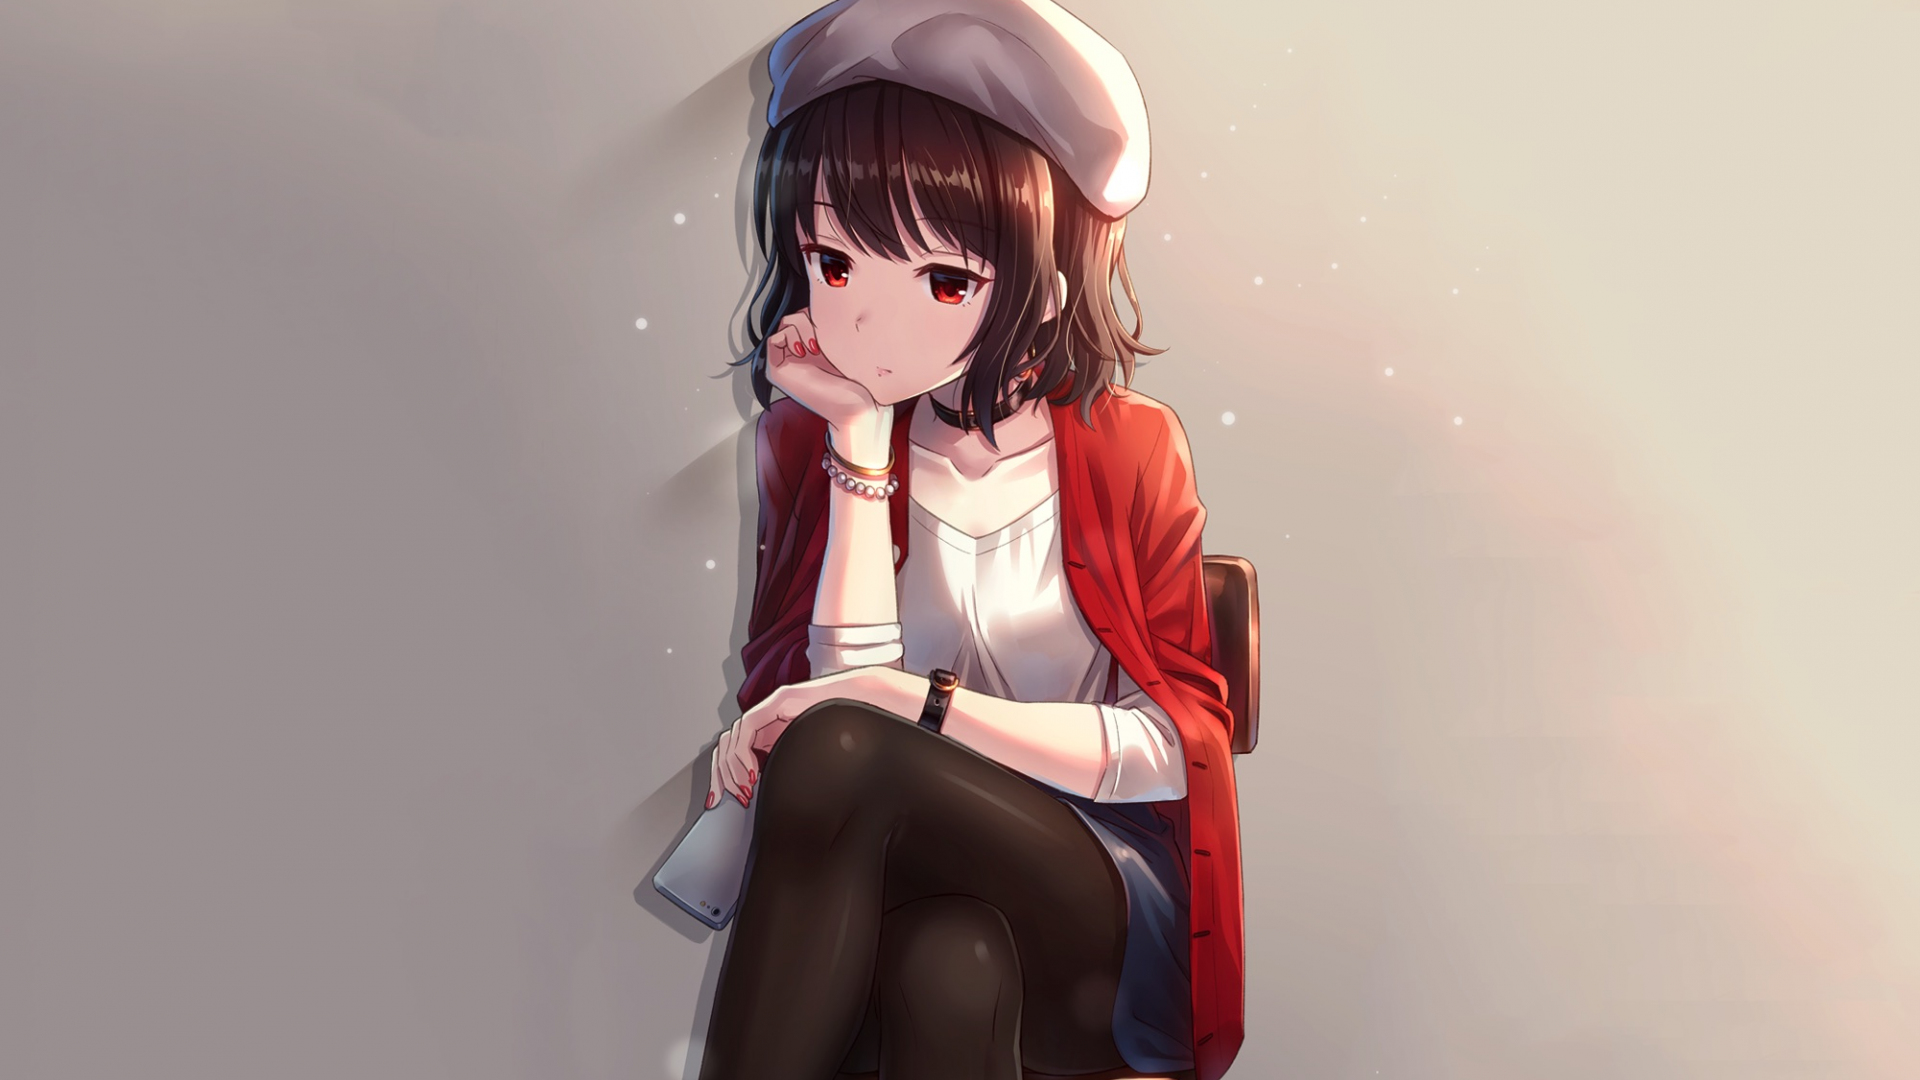 Download 1920x1080 Wallpaper Red Eyes Cute Anime Girl Sit